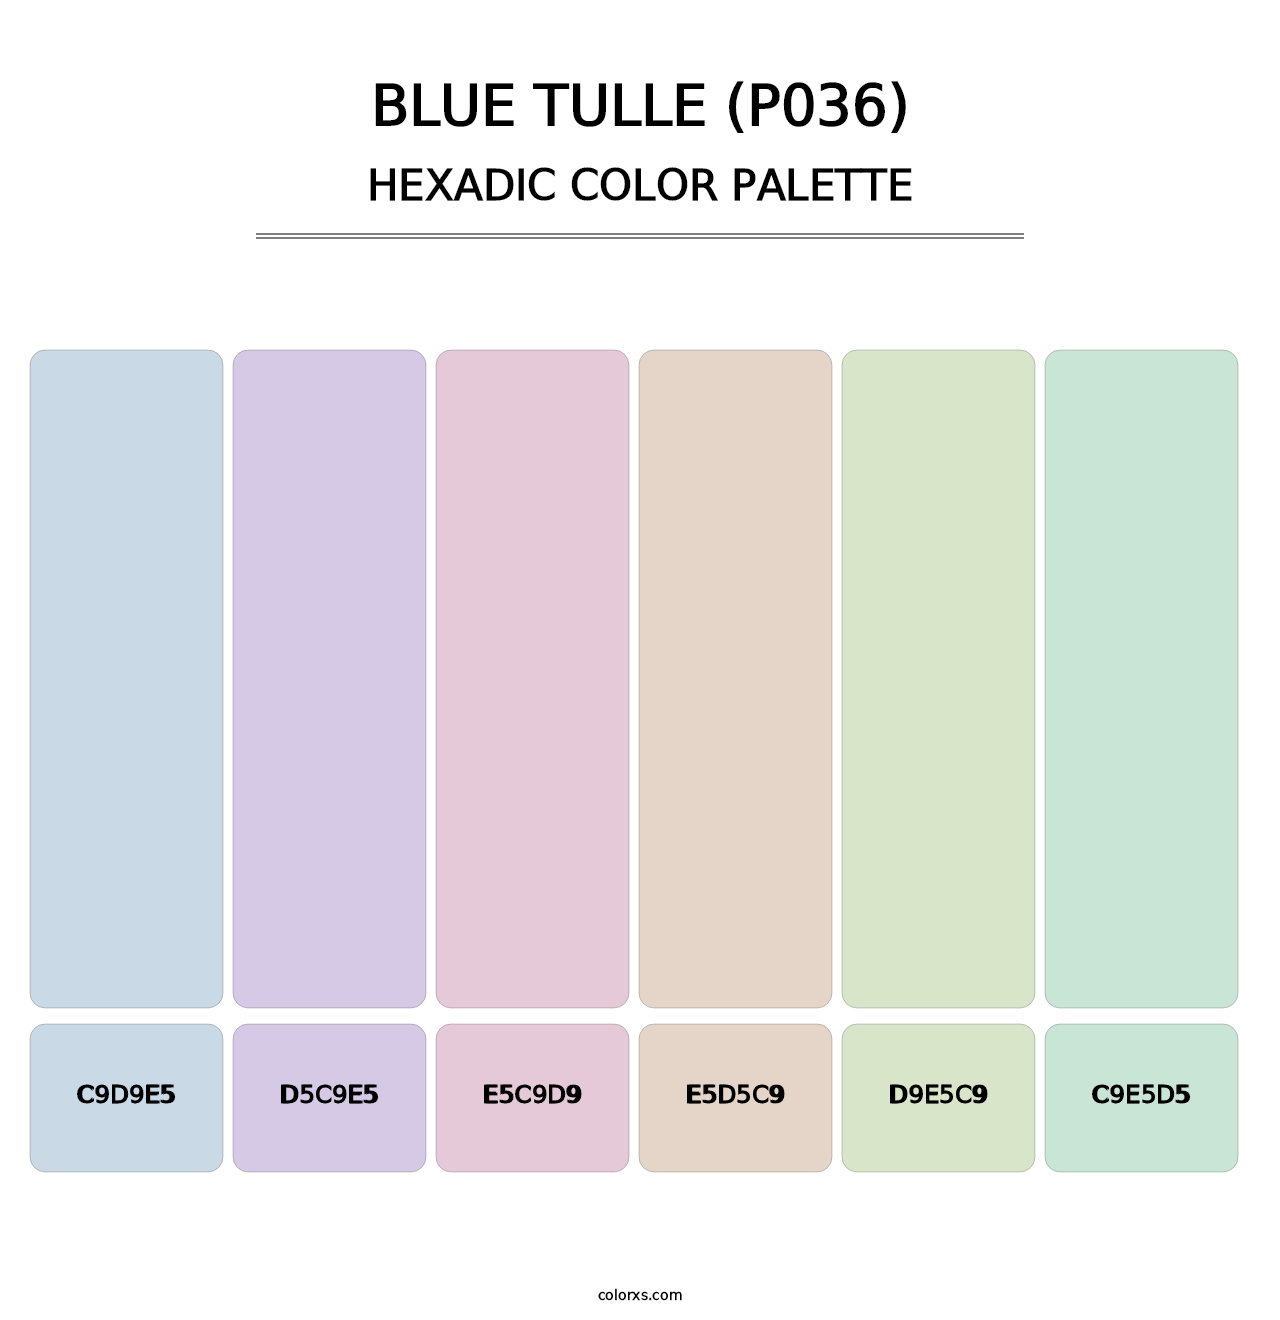 Blue Tulle (P036) - Hexadic Color Palette